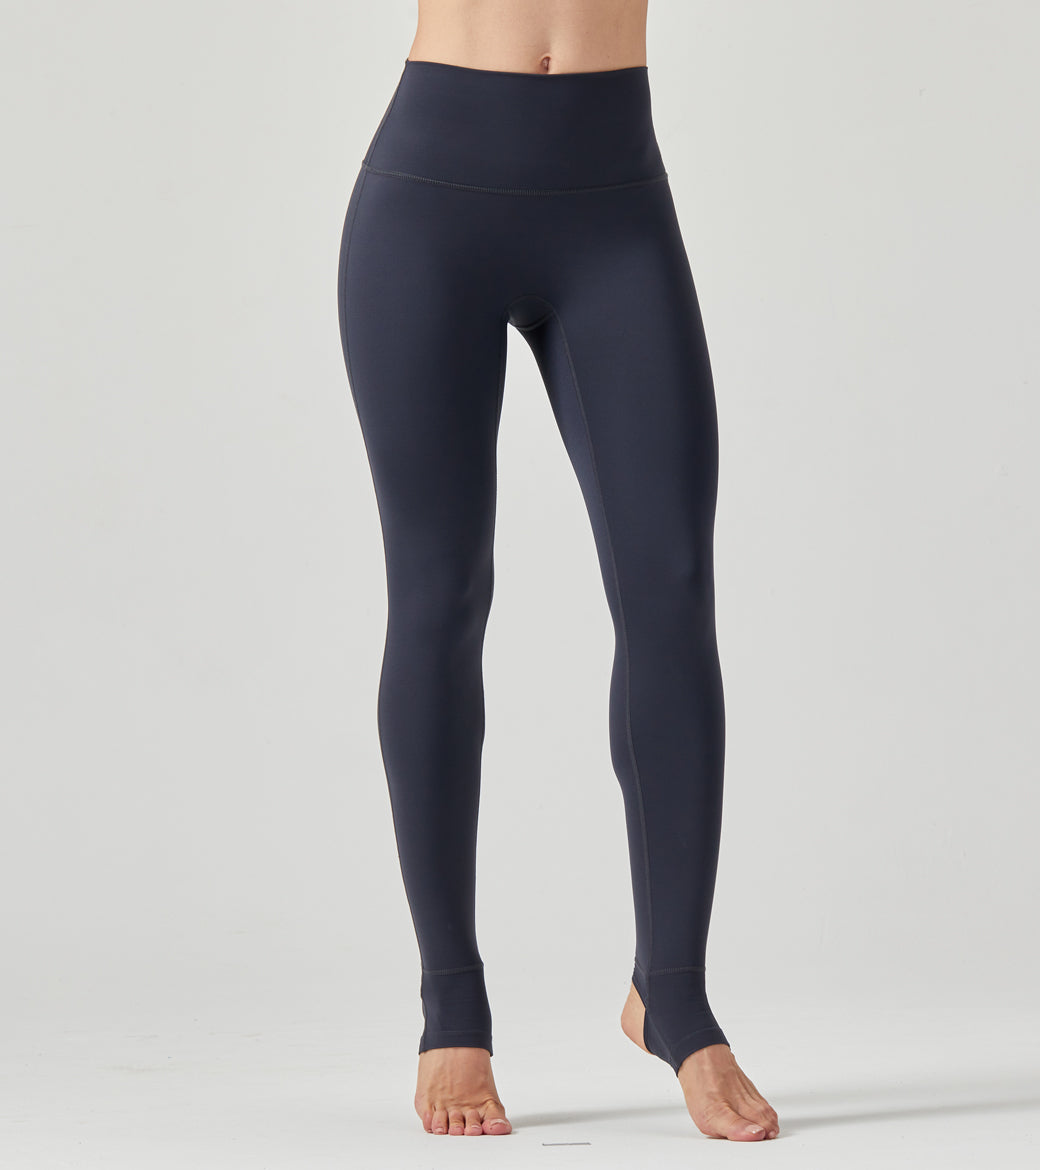 LOVESOFT Women's Dark Grey Easy Warm Yarm High Waist Hips Running Yoga Stepping Pants